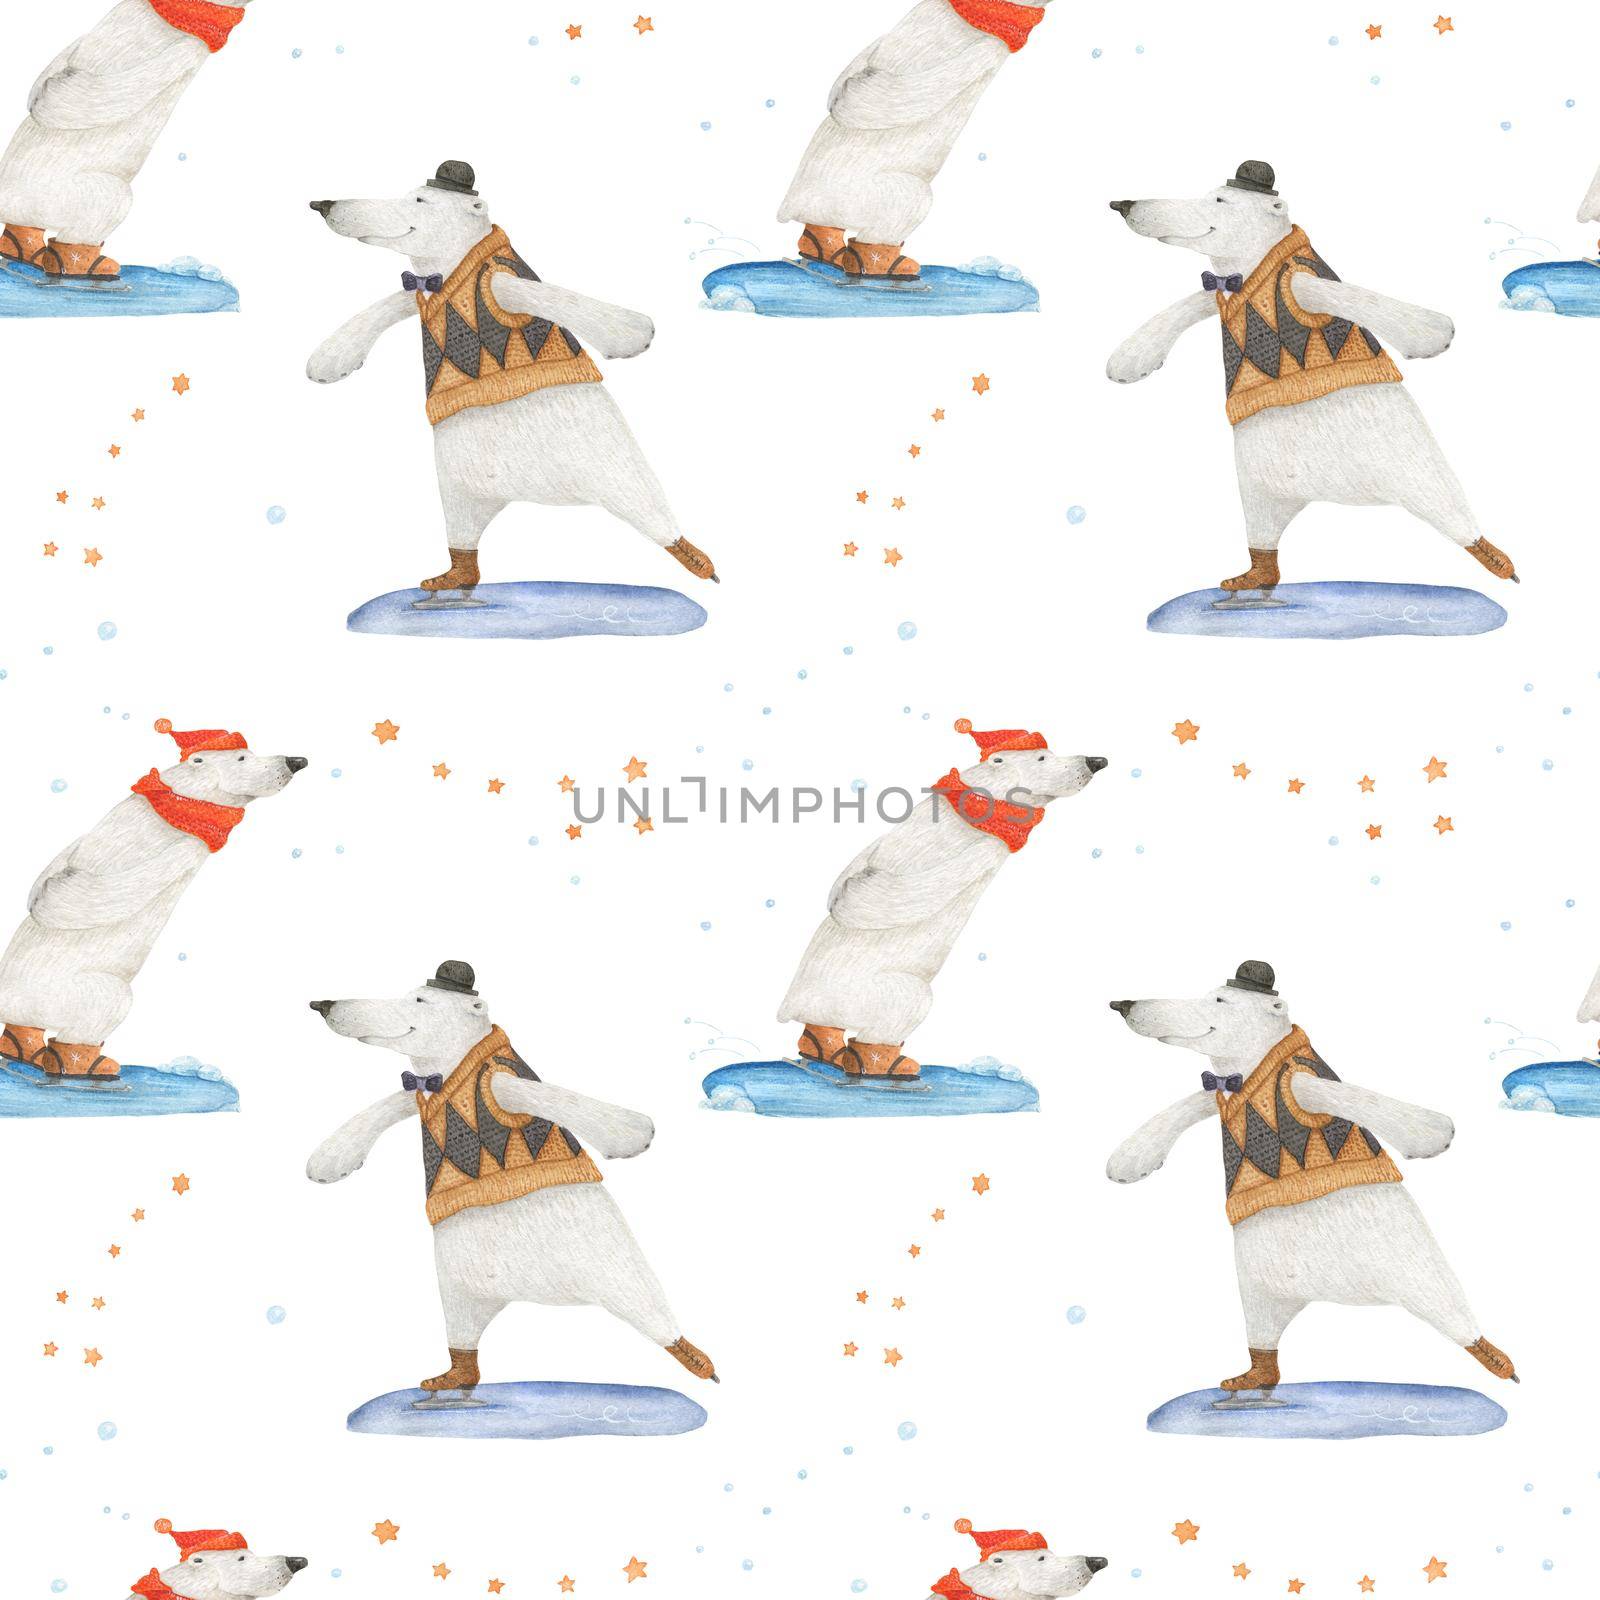 Polar bear winter vacation. Art seamless pattern by Xeniasnowstorm